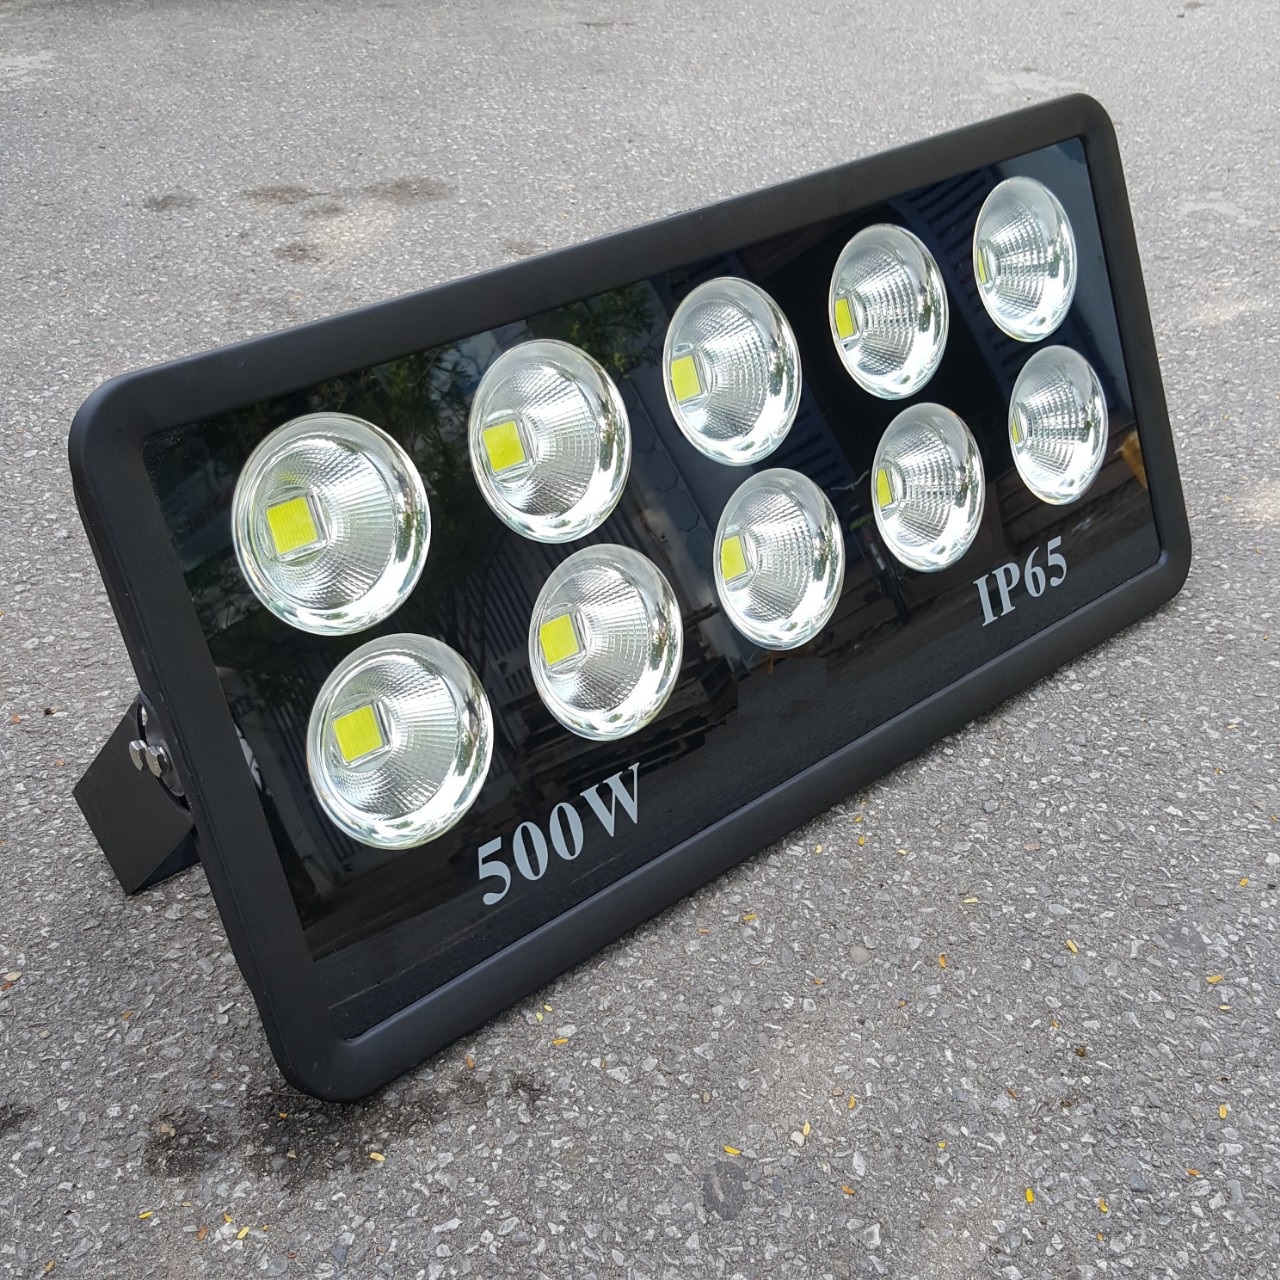 Đèn pha LED 500W RBG đổi màu cao cấp